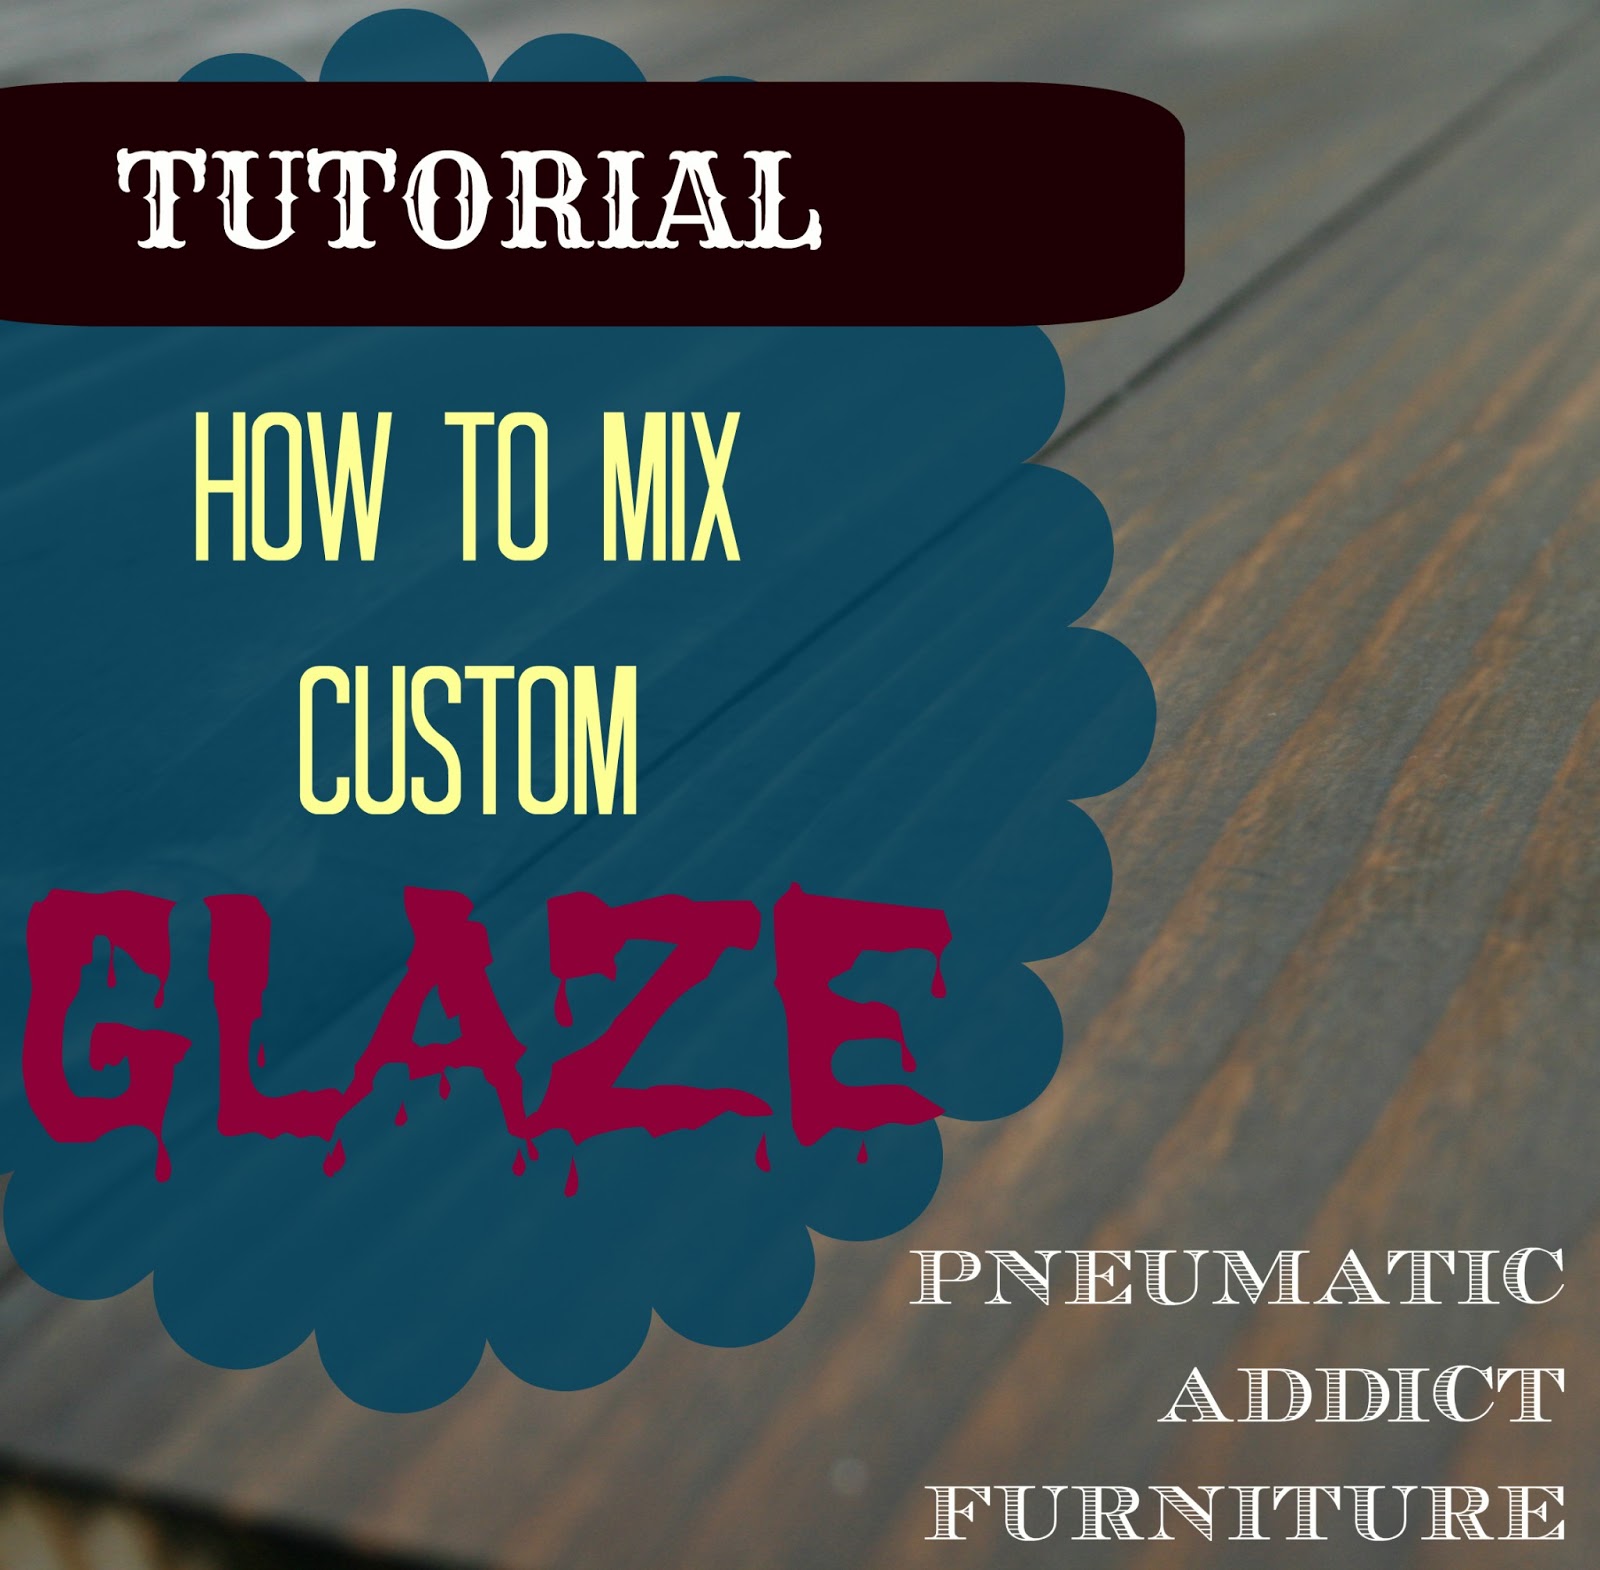 Pneumatic Addict Furniture: Mixing Custom Glaze